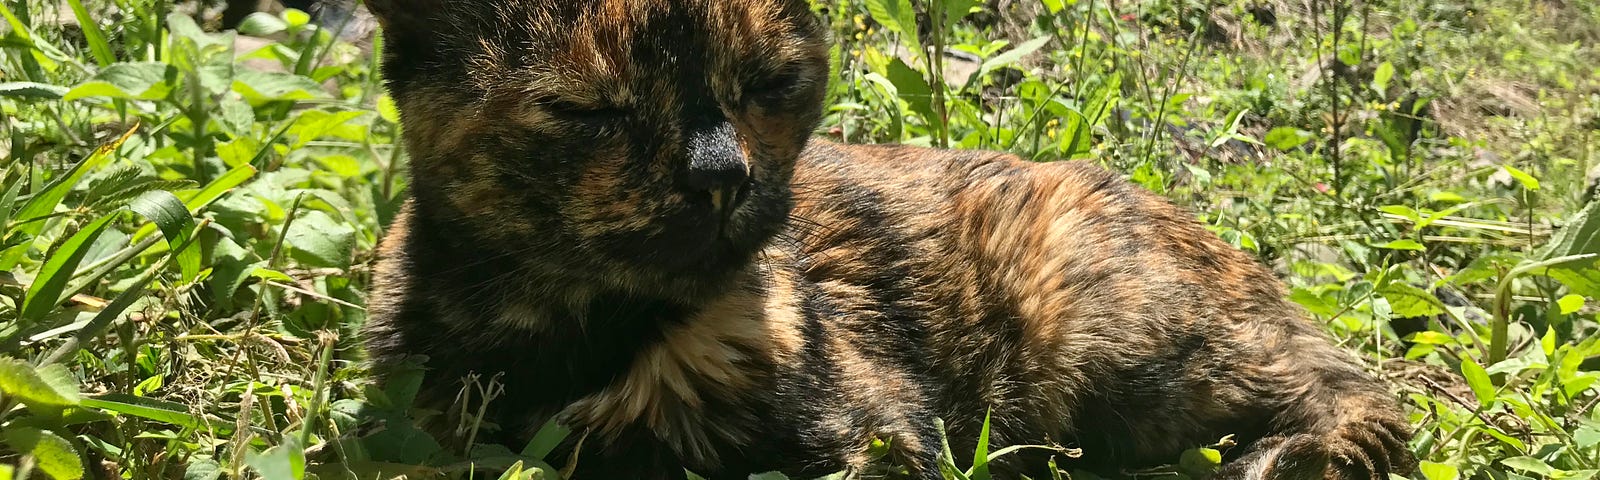 Molasses kitty Rebecca Murauskas Boquete Panama I-131 Radioactive iodine thyroid treatment Feline Cancer survivor